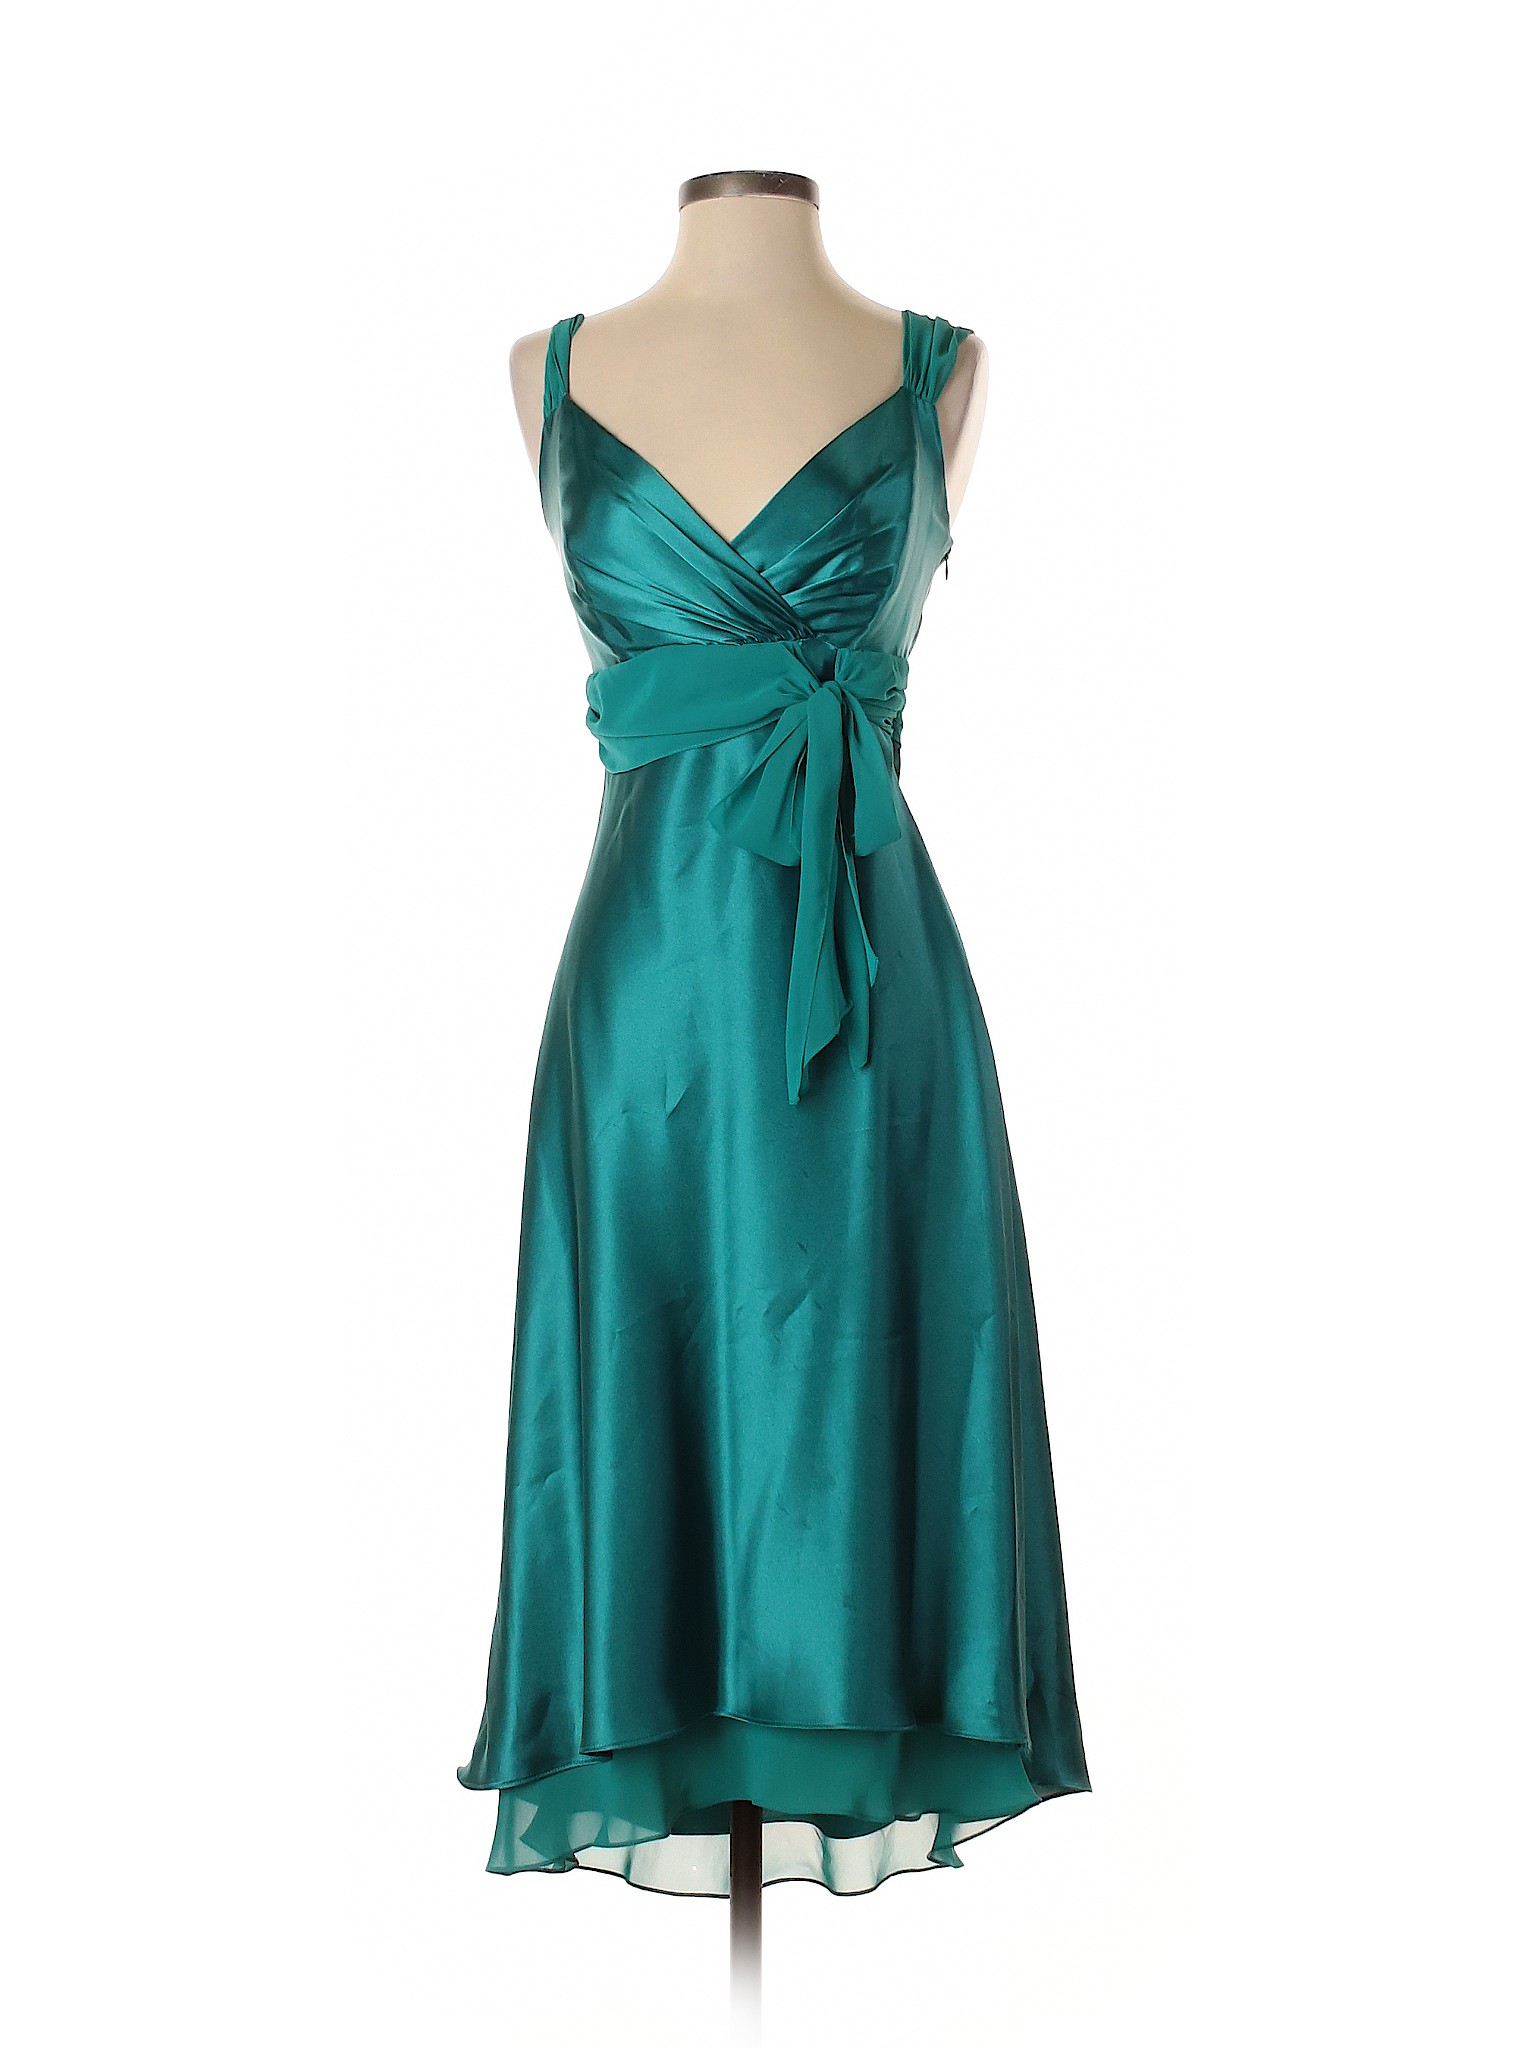 David's Bridal Women Green Cocktail Dress 4 | eBay